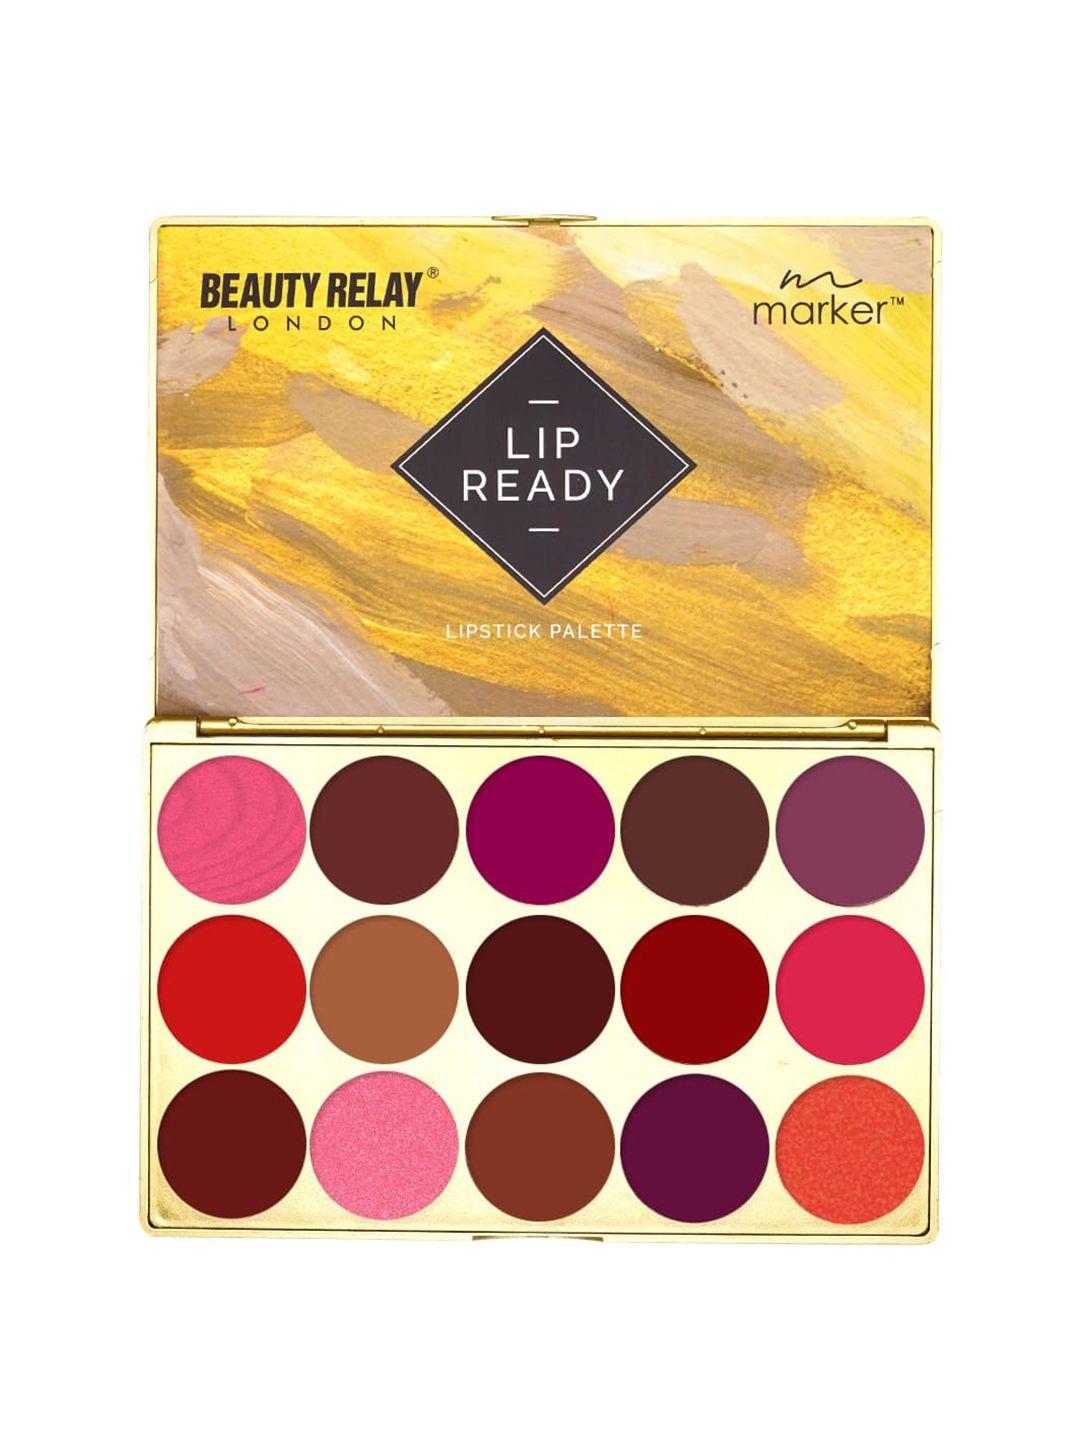 beautyrelay london marker lipstick palette with15 shades 42 g - lip ready